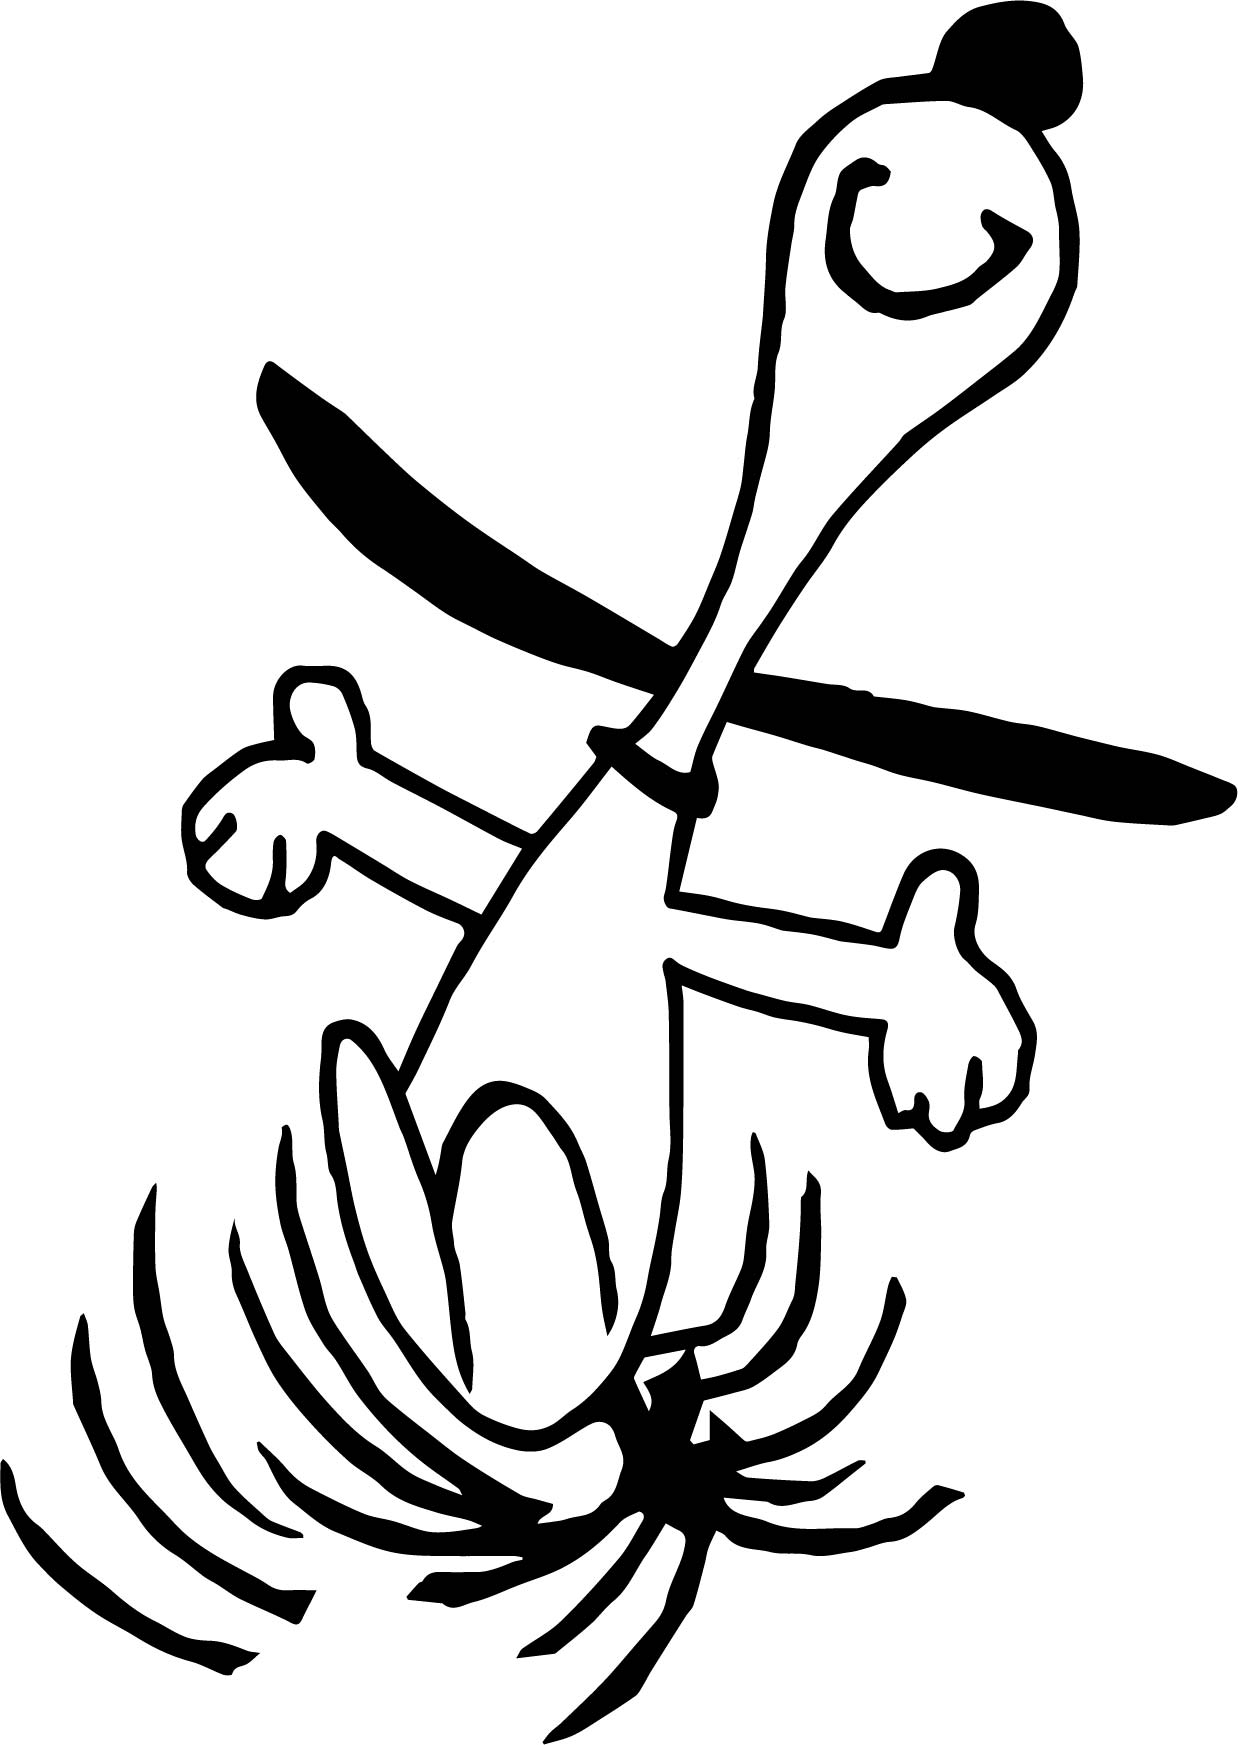 Dancing-Snoopy-Happy-Dance-Coloring-Page.jpg